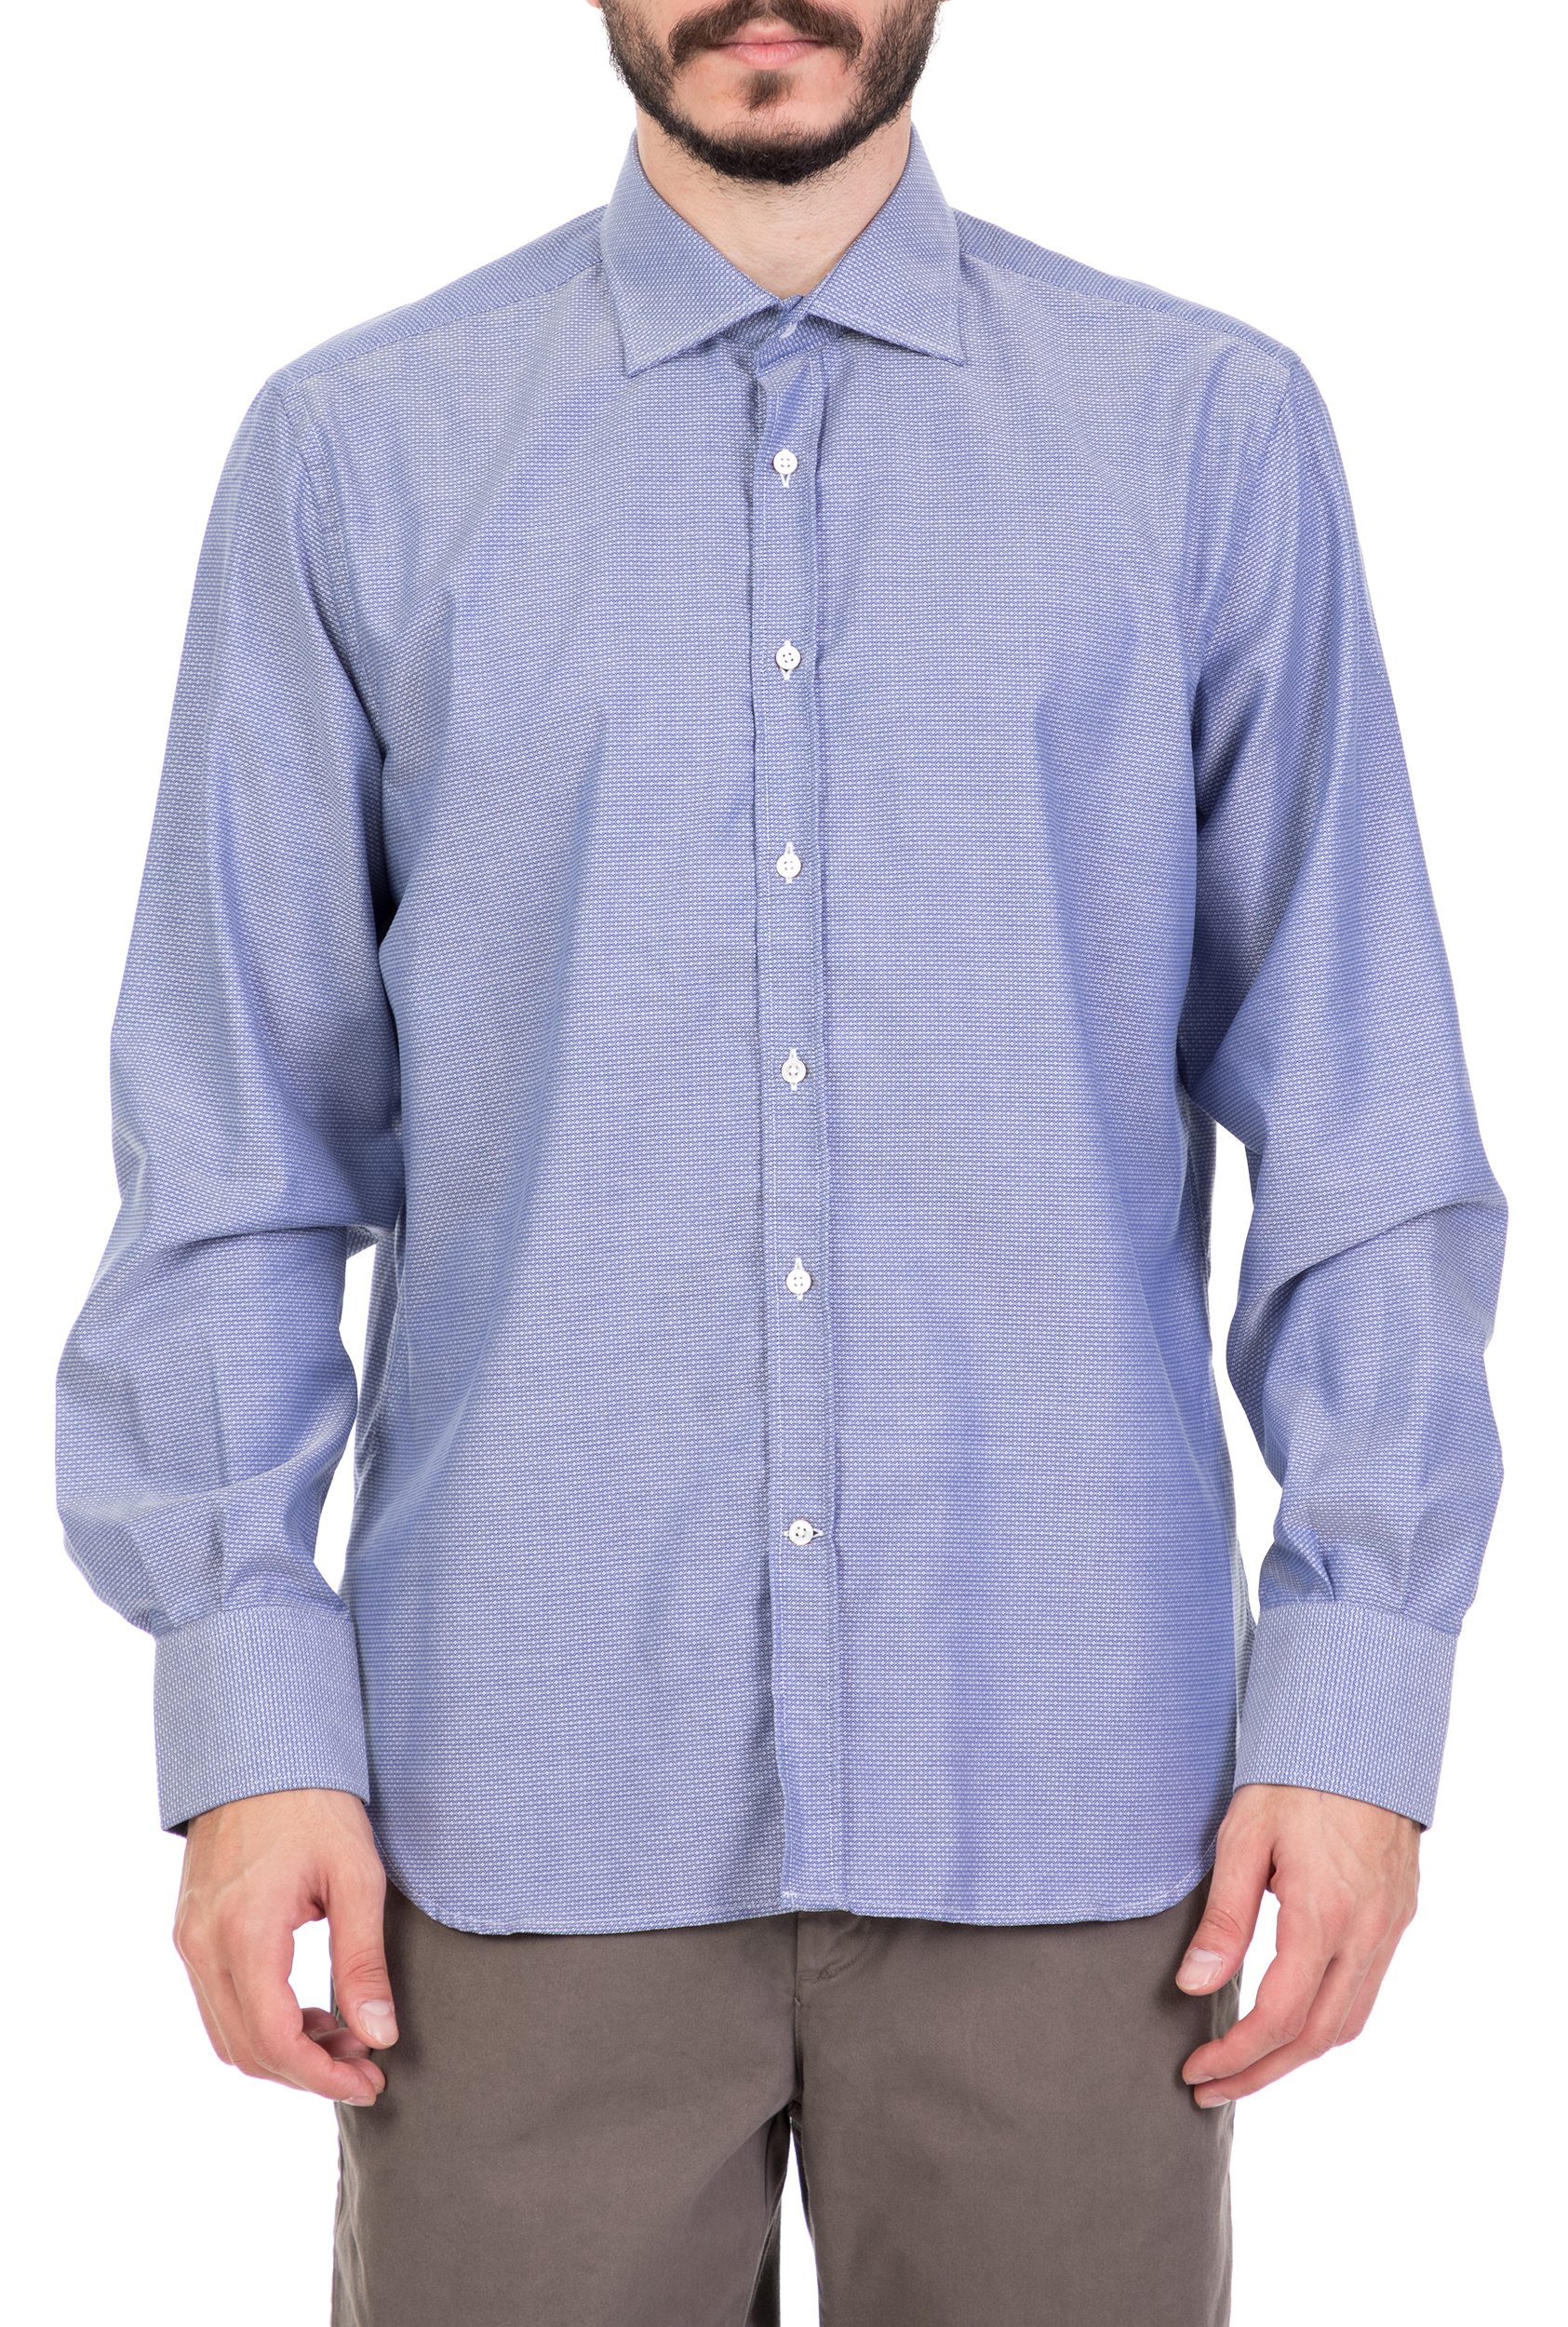 BROOKSFIELD - Ανδρικό μακρυμάνικο πουκάμισο BROOKSFIELD γαλάζιο